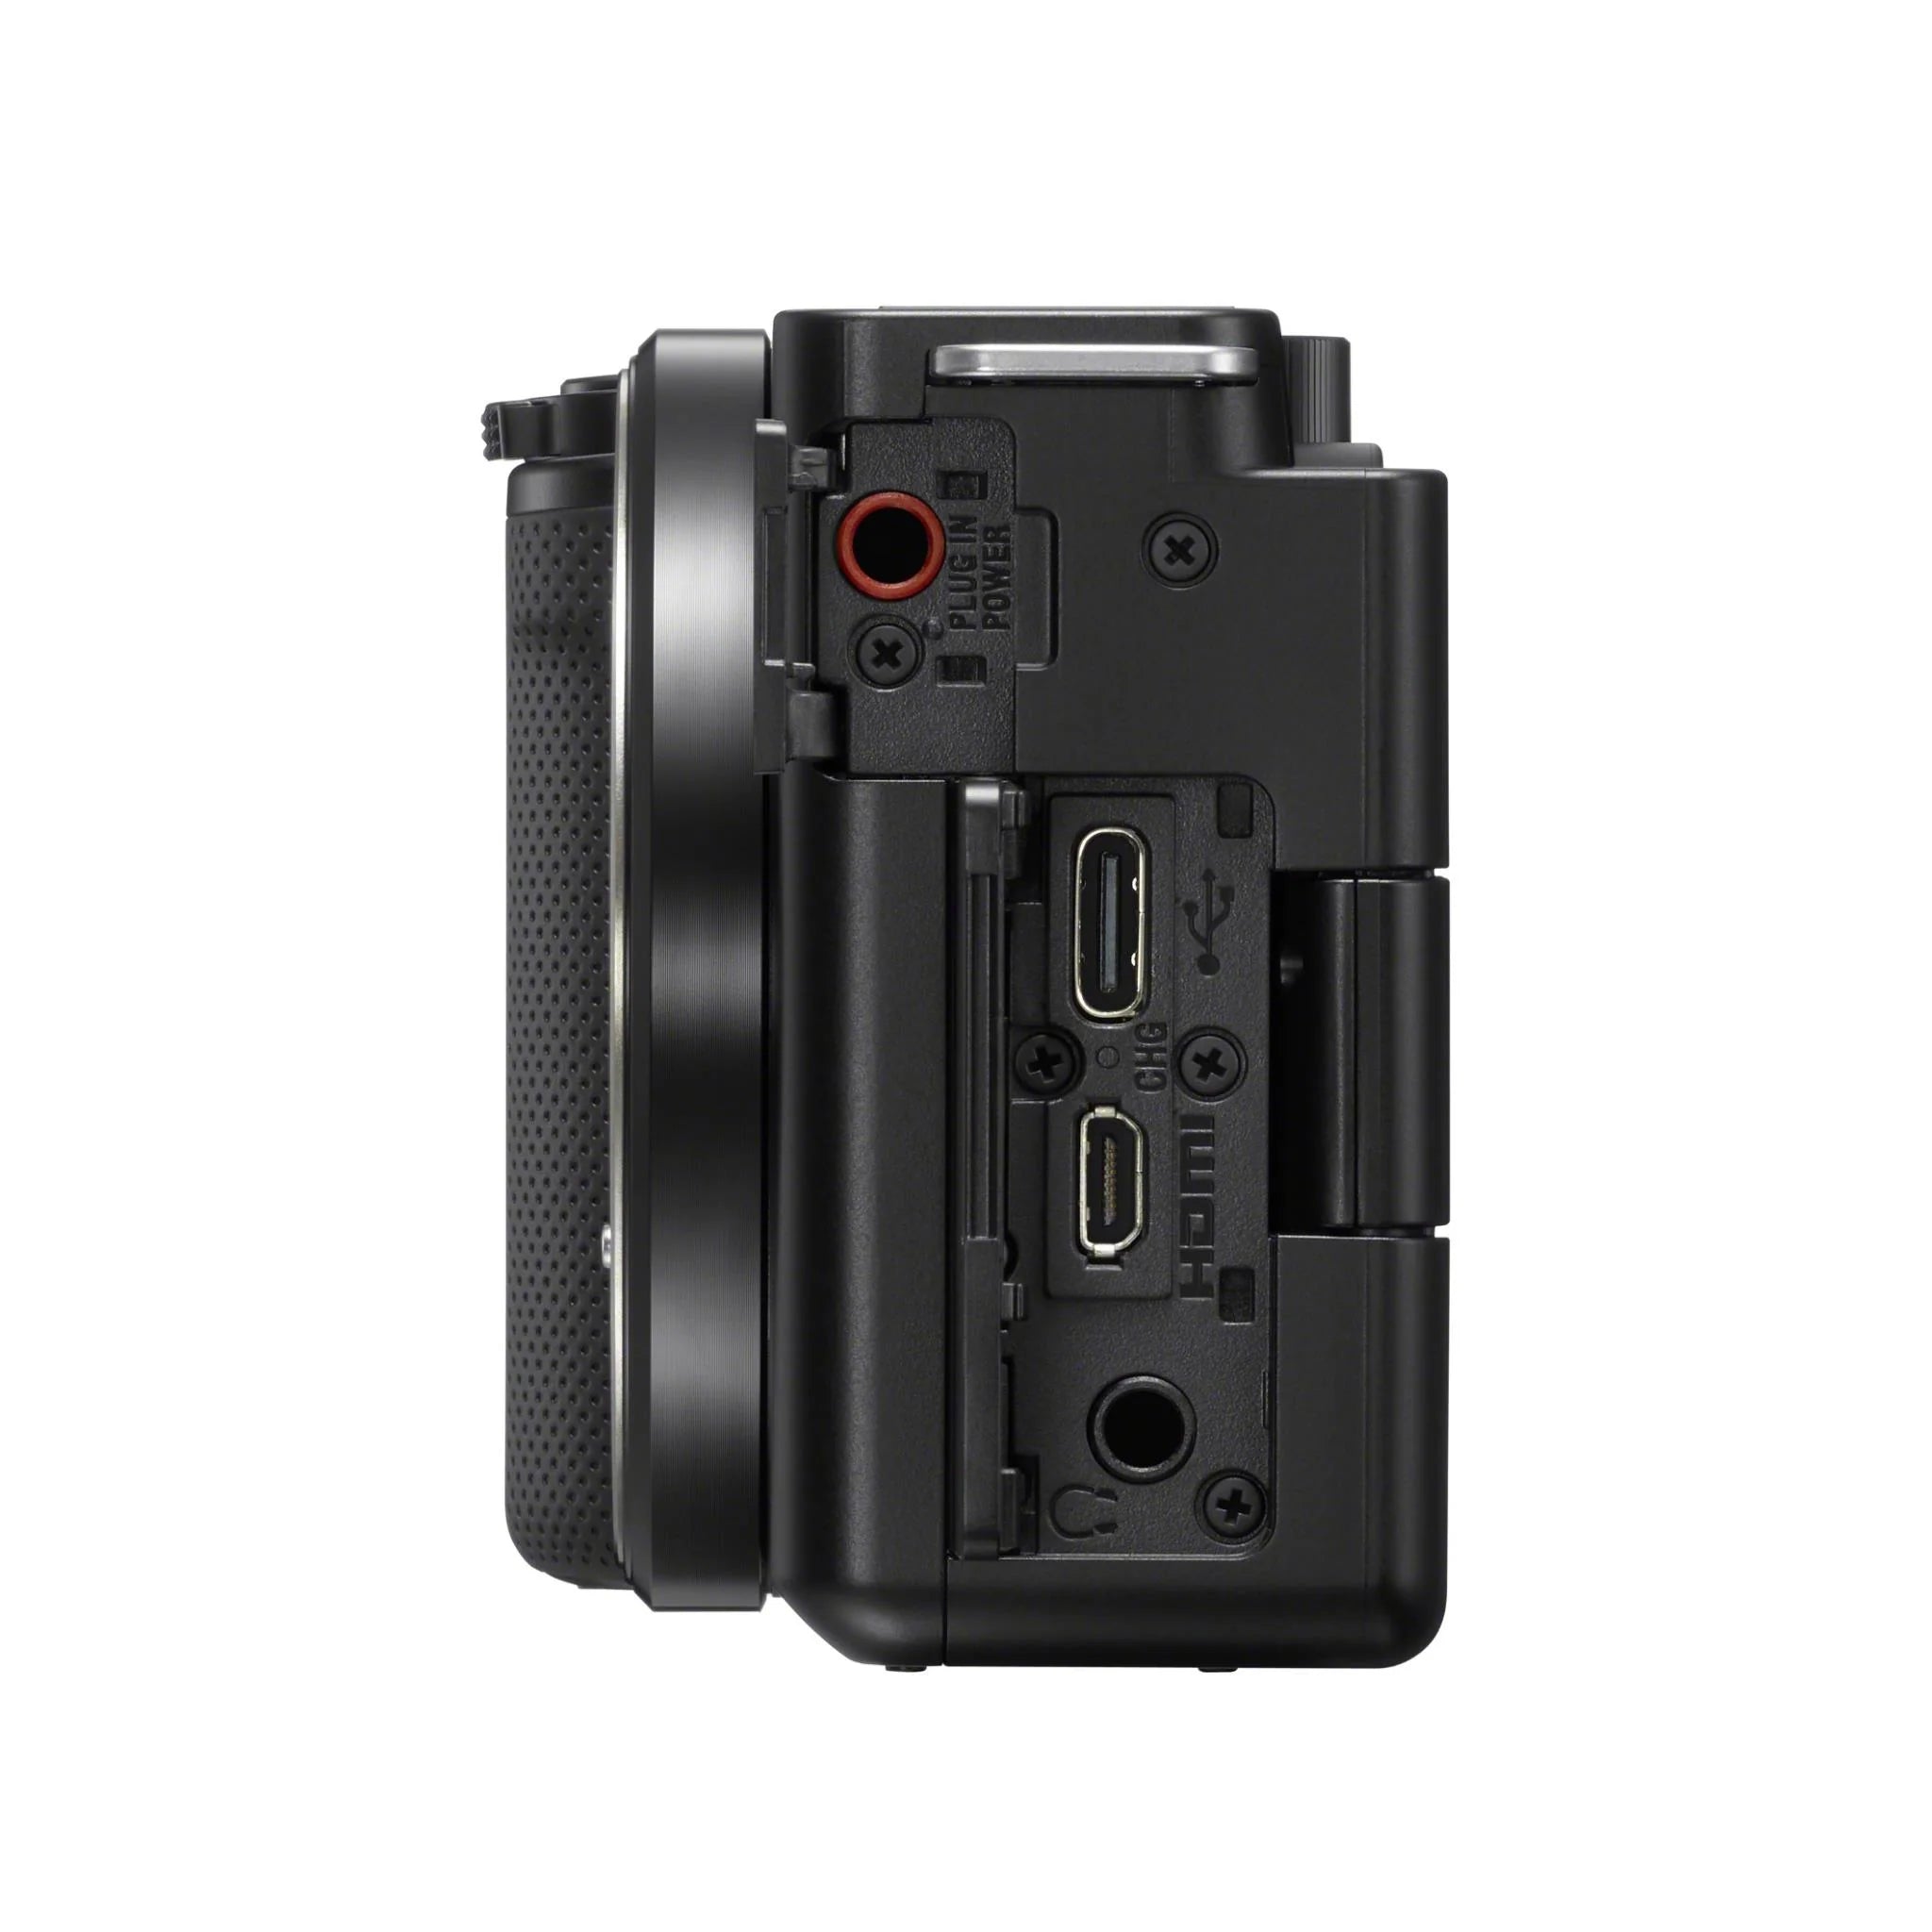 Sony Mirrorless Vlog Camera with 16-50mm Lens Kit (Black)